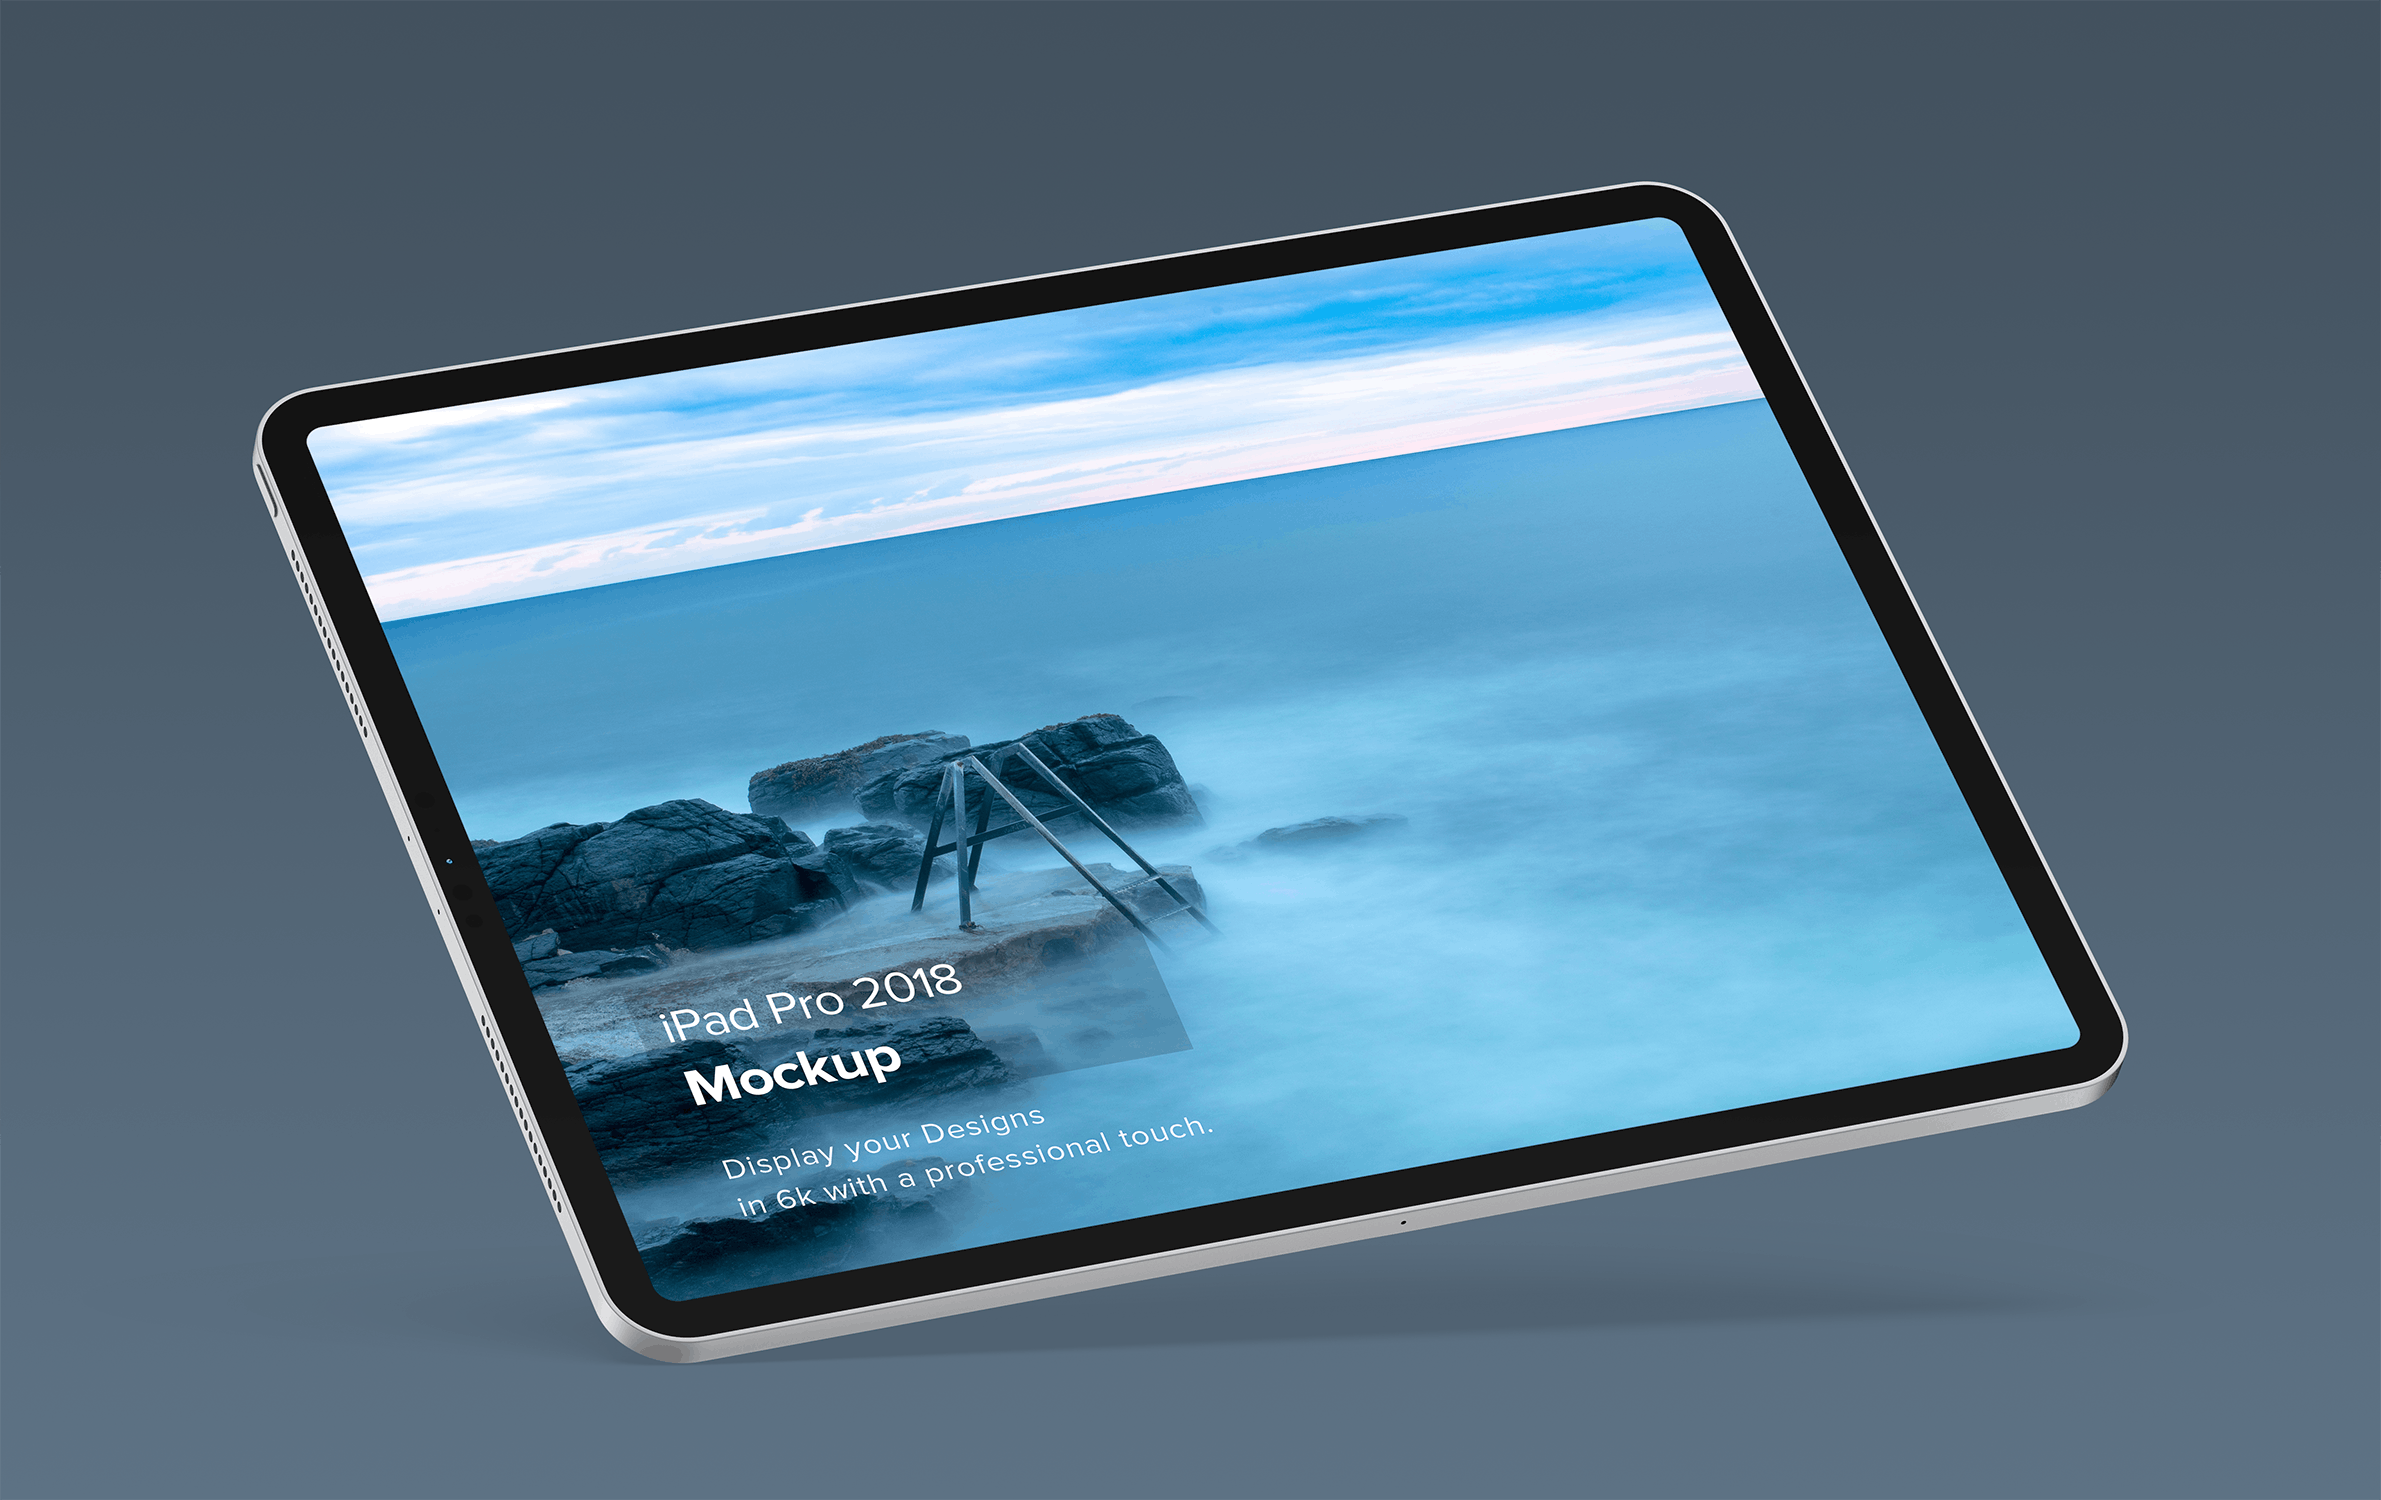 iPad Pro专业平板电脑设计演示素材库精选样机模板套装v2 iPad Mockup 2.0插图(4)